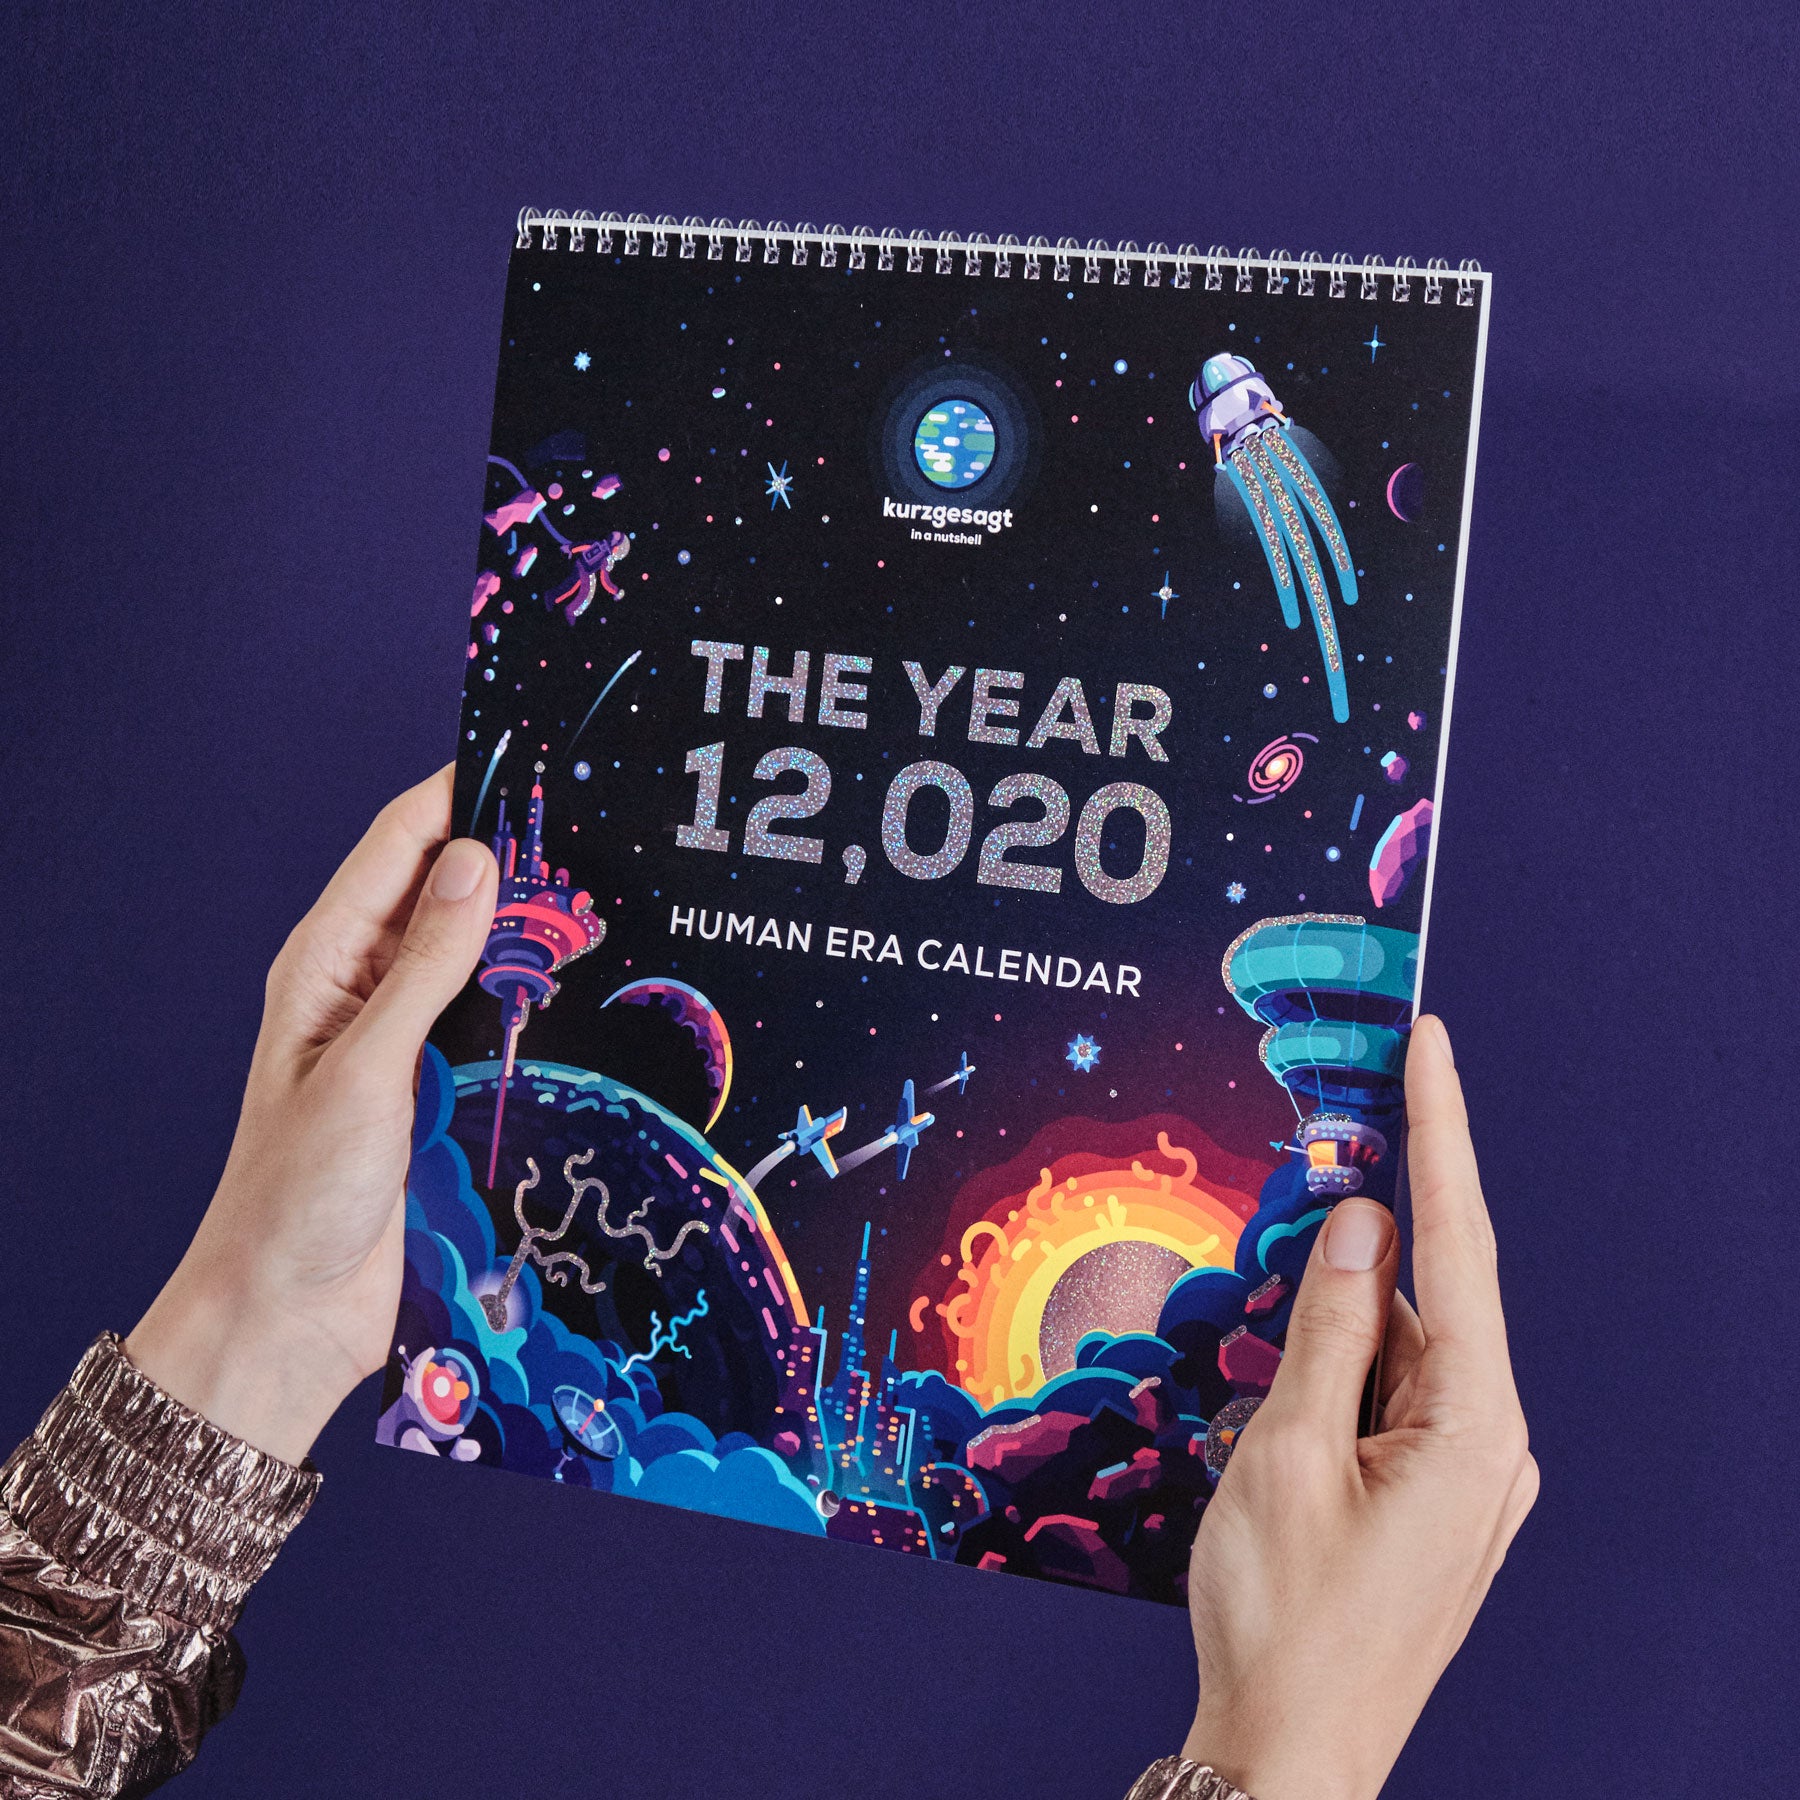 12,020 Human Space Era Calendar – in a nutshell – kurzgesagt